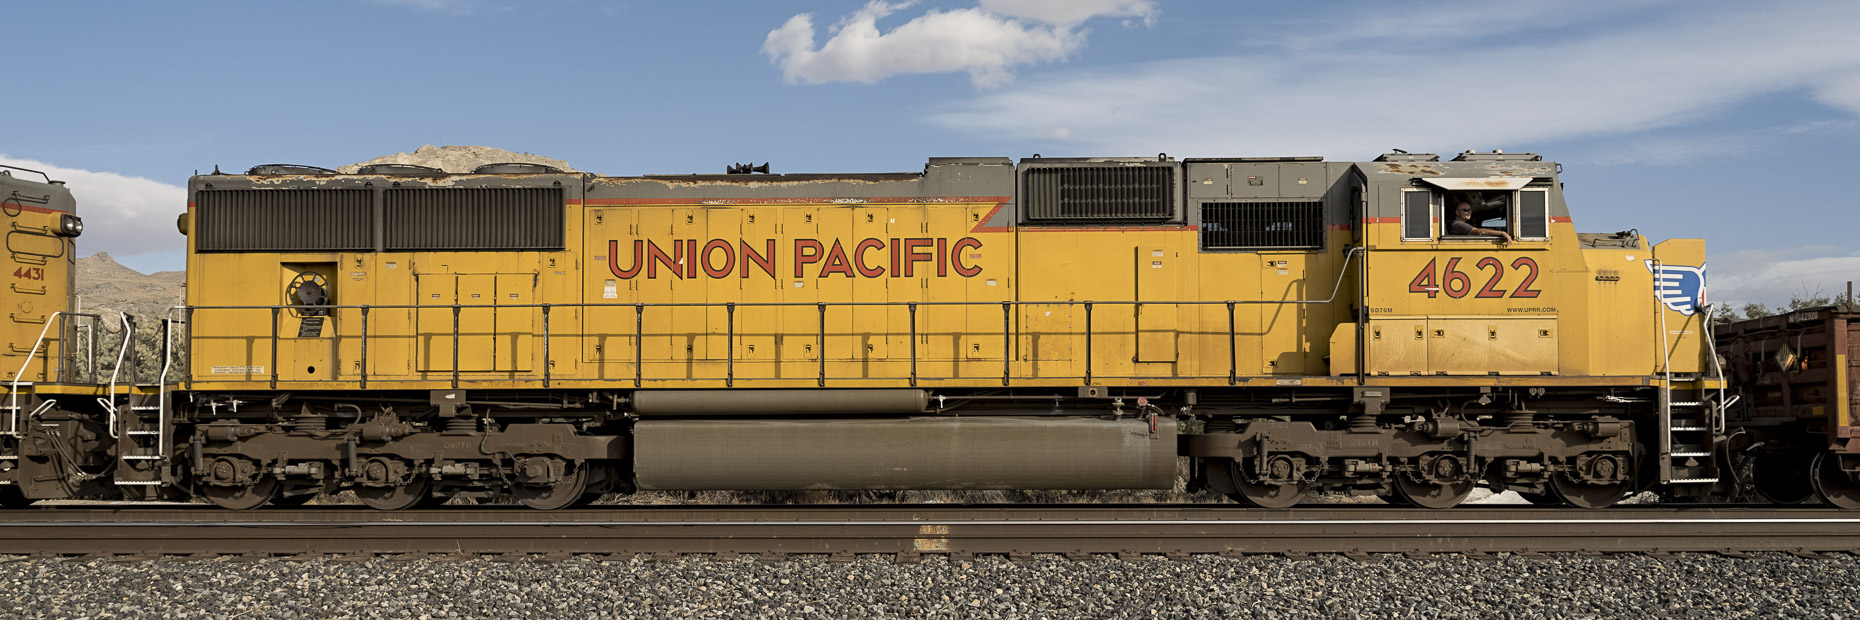 Locomotive UP 4622